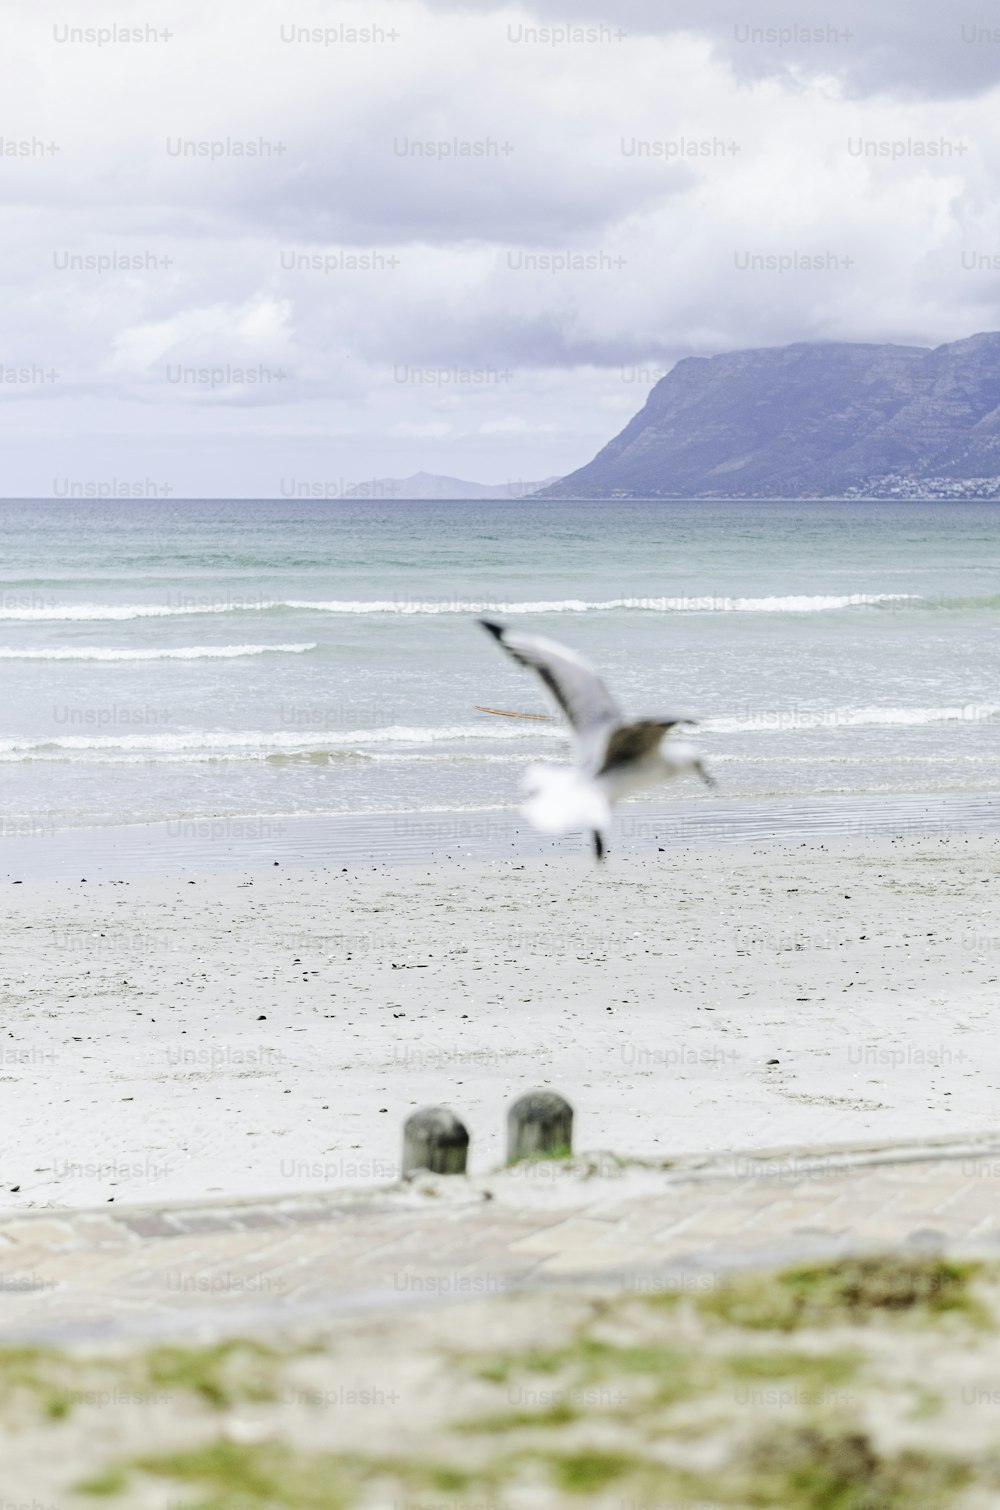 a bird flying over a sandy beach next to the ocean